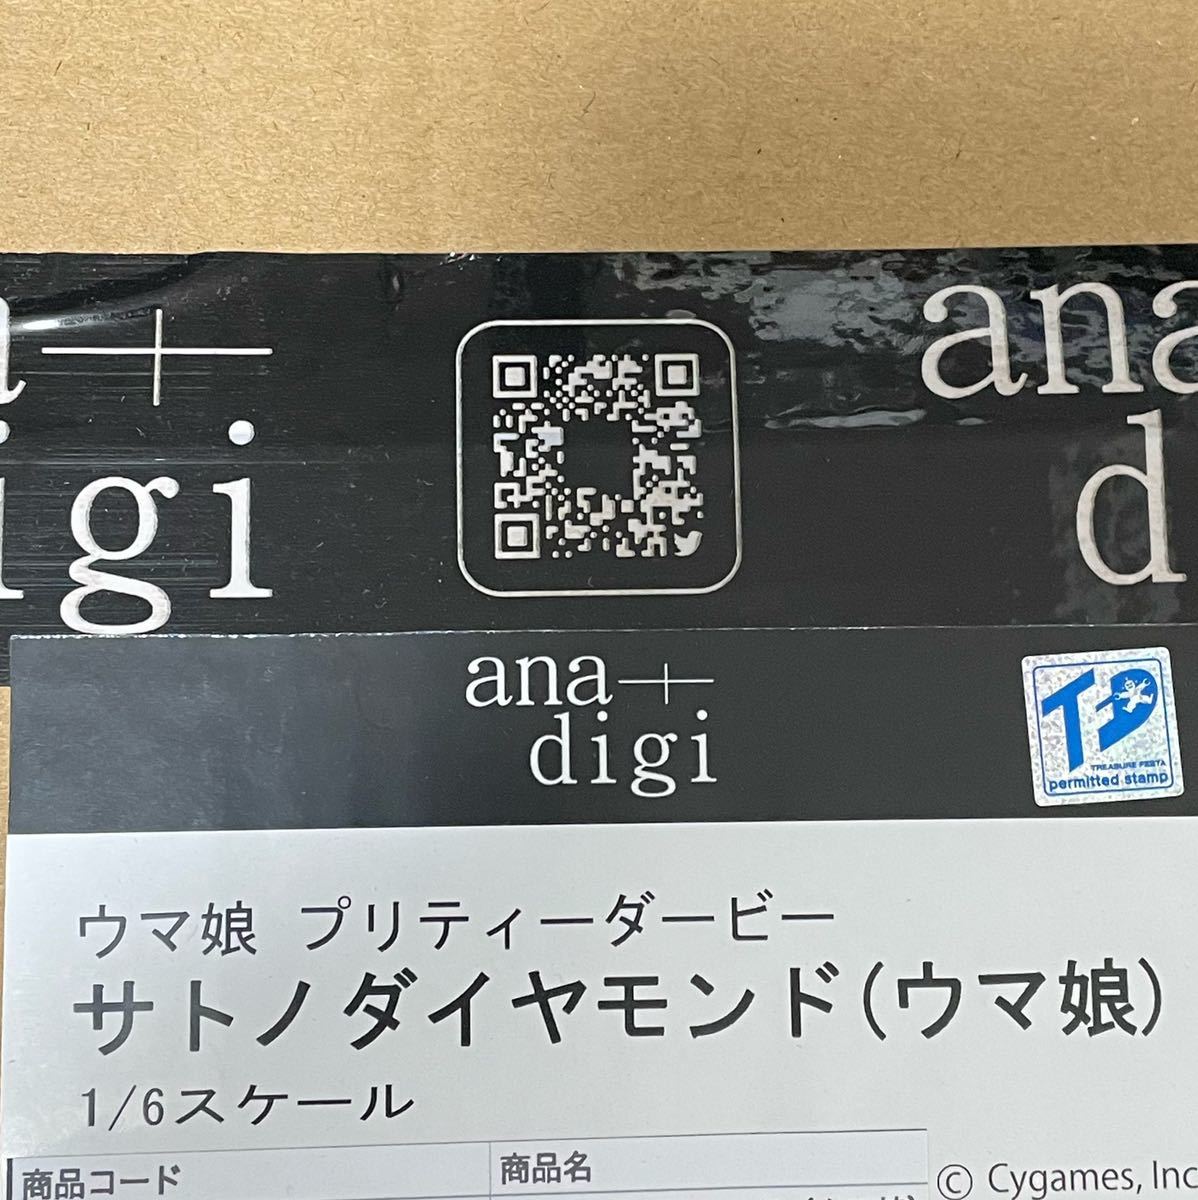 ana-digi サトノダイヤモンド ウマ娘 プリティーダービー ガレージキット トレフェス 2